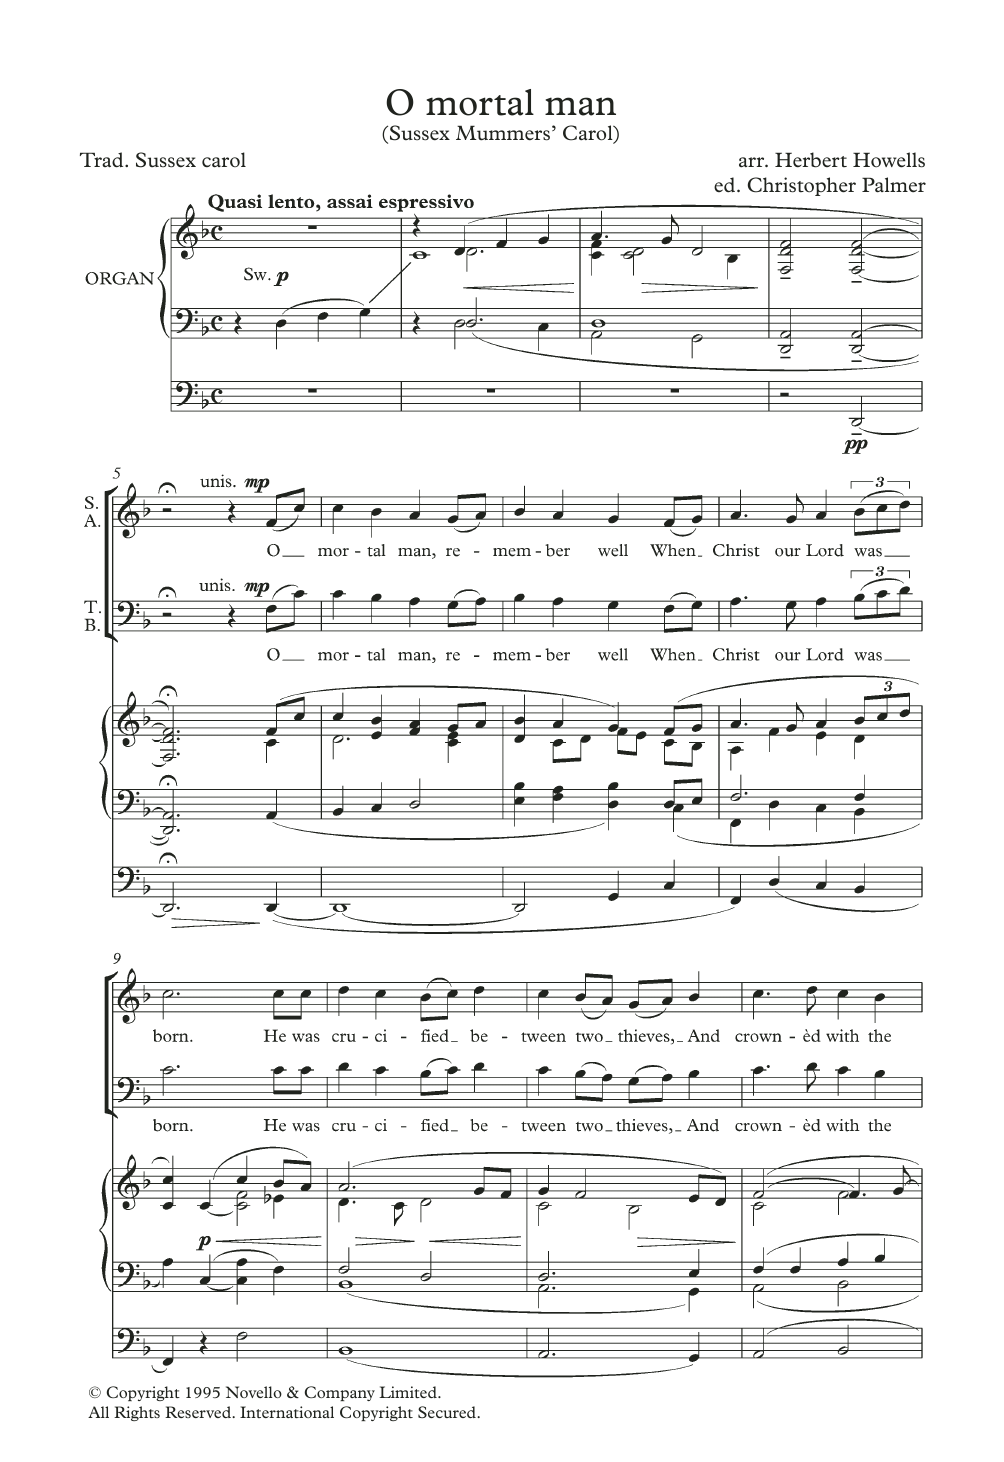 Traditional Carol O Mortal Man (Sussex Mummers' Carol) (arr. Herbert Howells) Sheet Music Notes & Chords for SATB Choir - Download or Print PDF